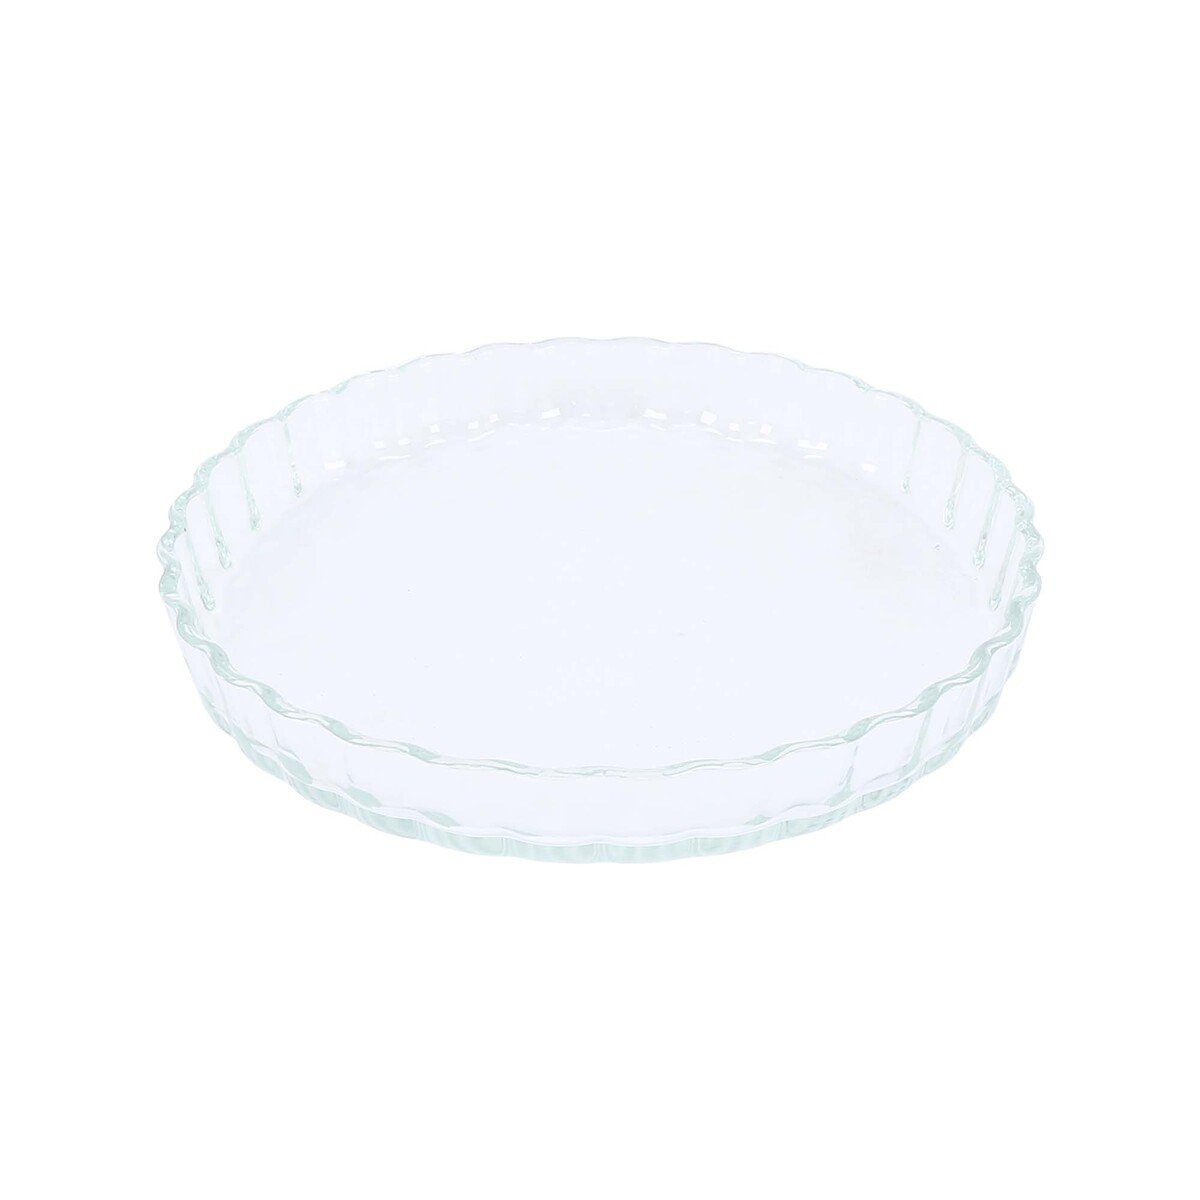 Chefline HSAW15 Borosilicate Glass Round Baking Dish, 1.2 Litre, Transparent